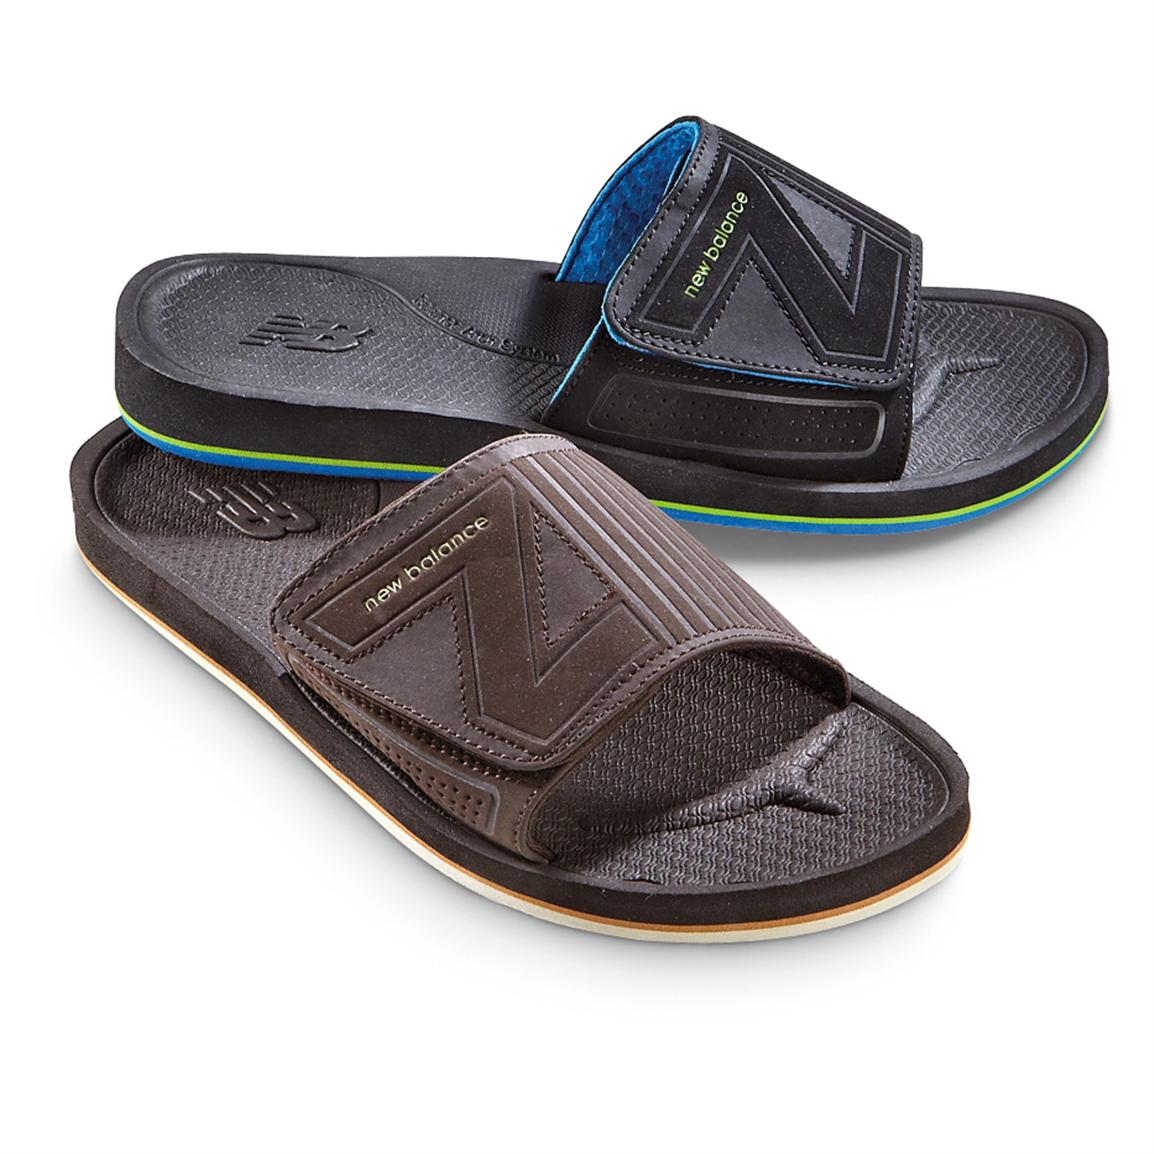 Buy > new balance men's slide sandals > in stock